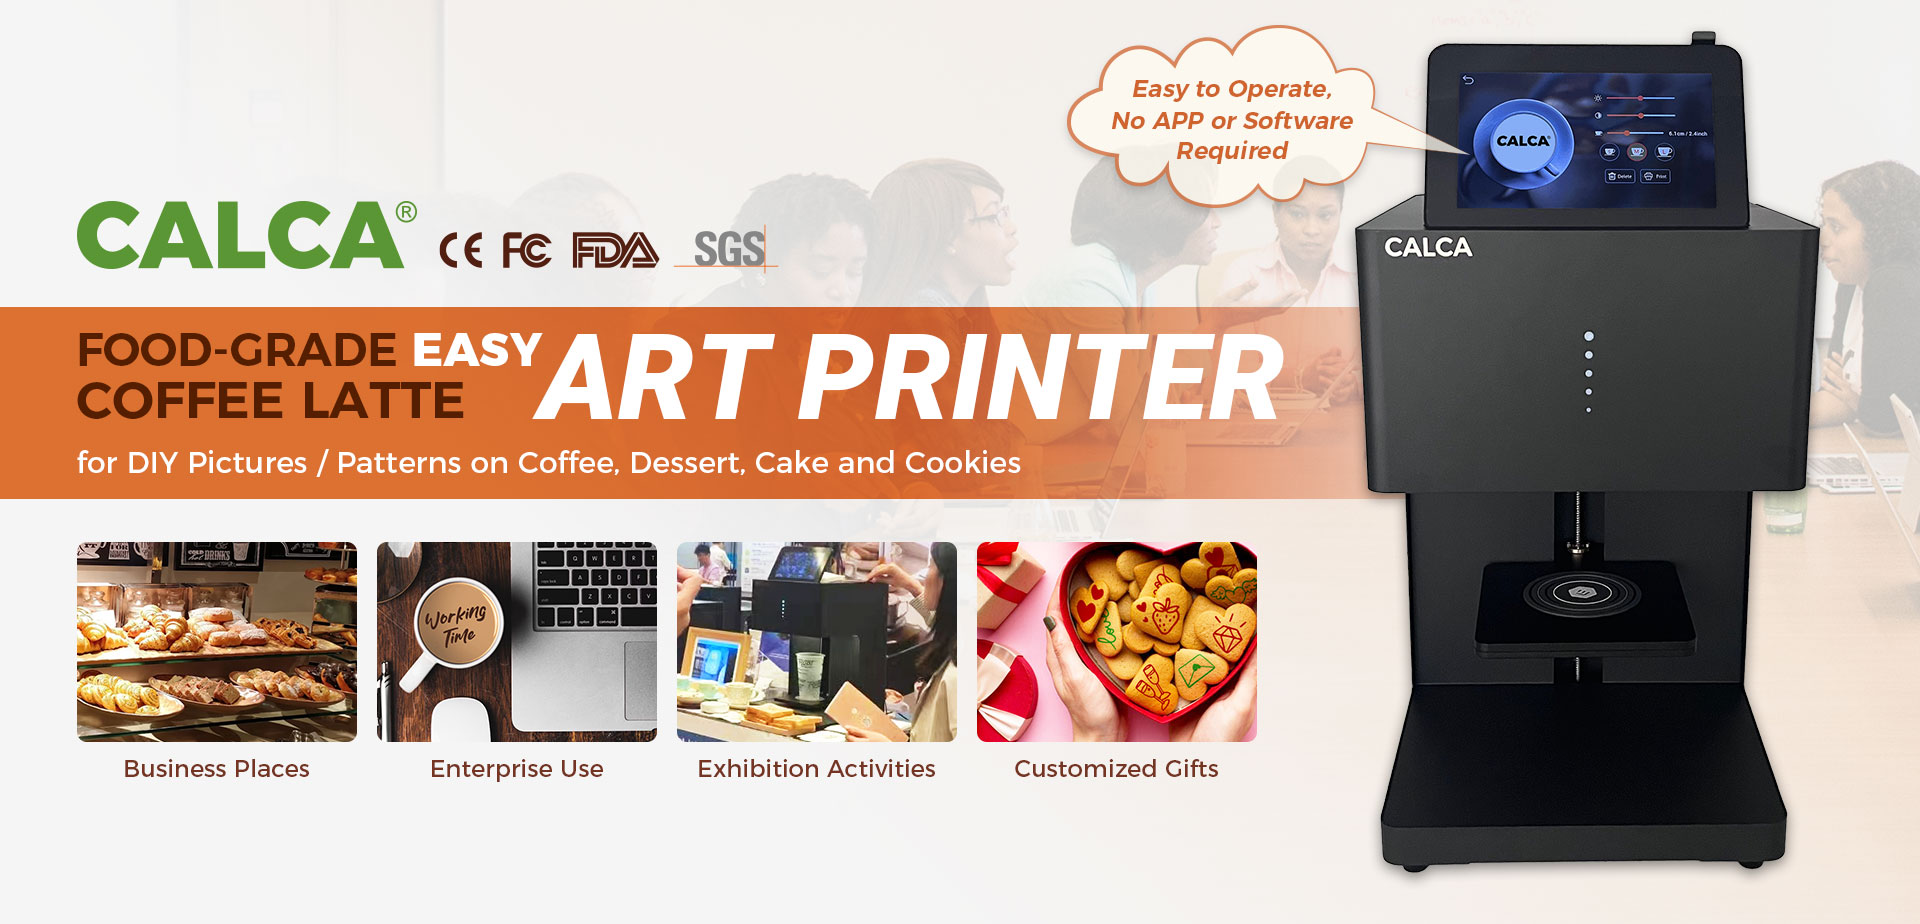 CALCA Food-Grade Easy Coffee Latte Art Printer